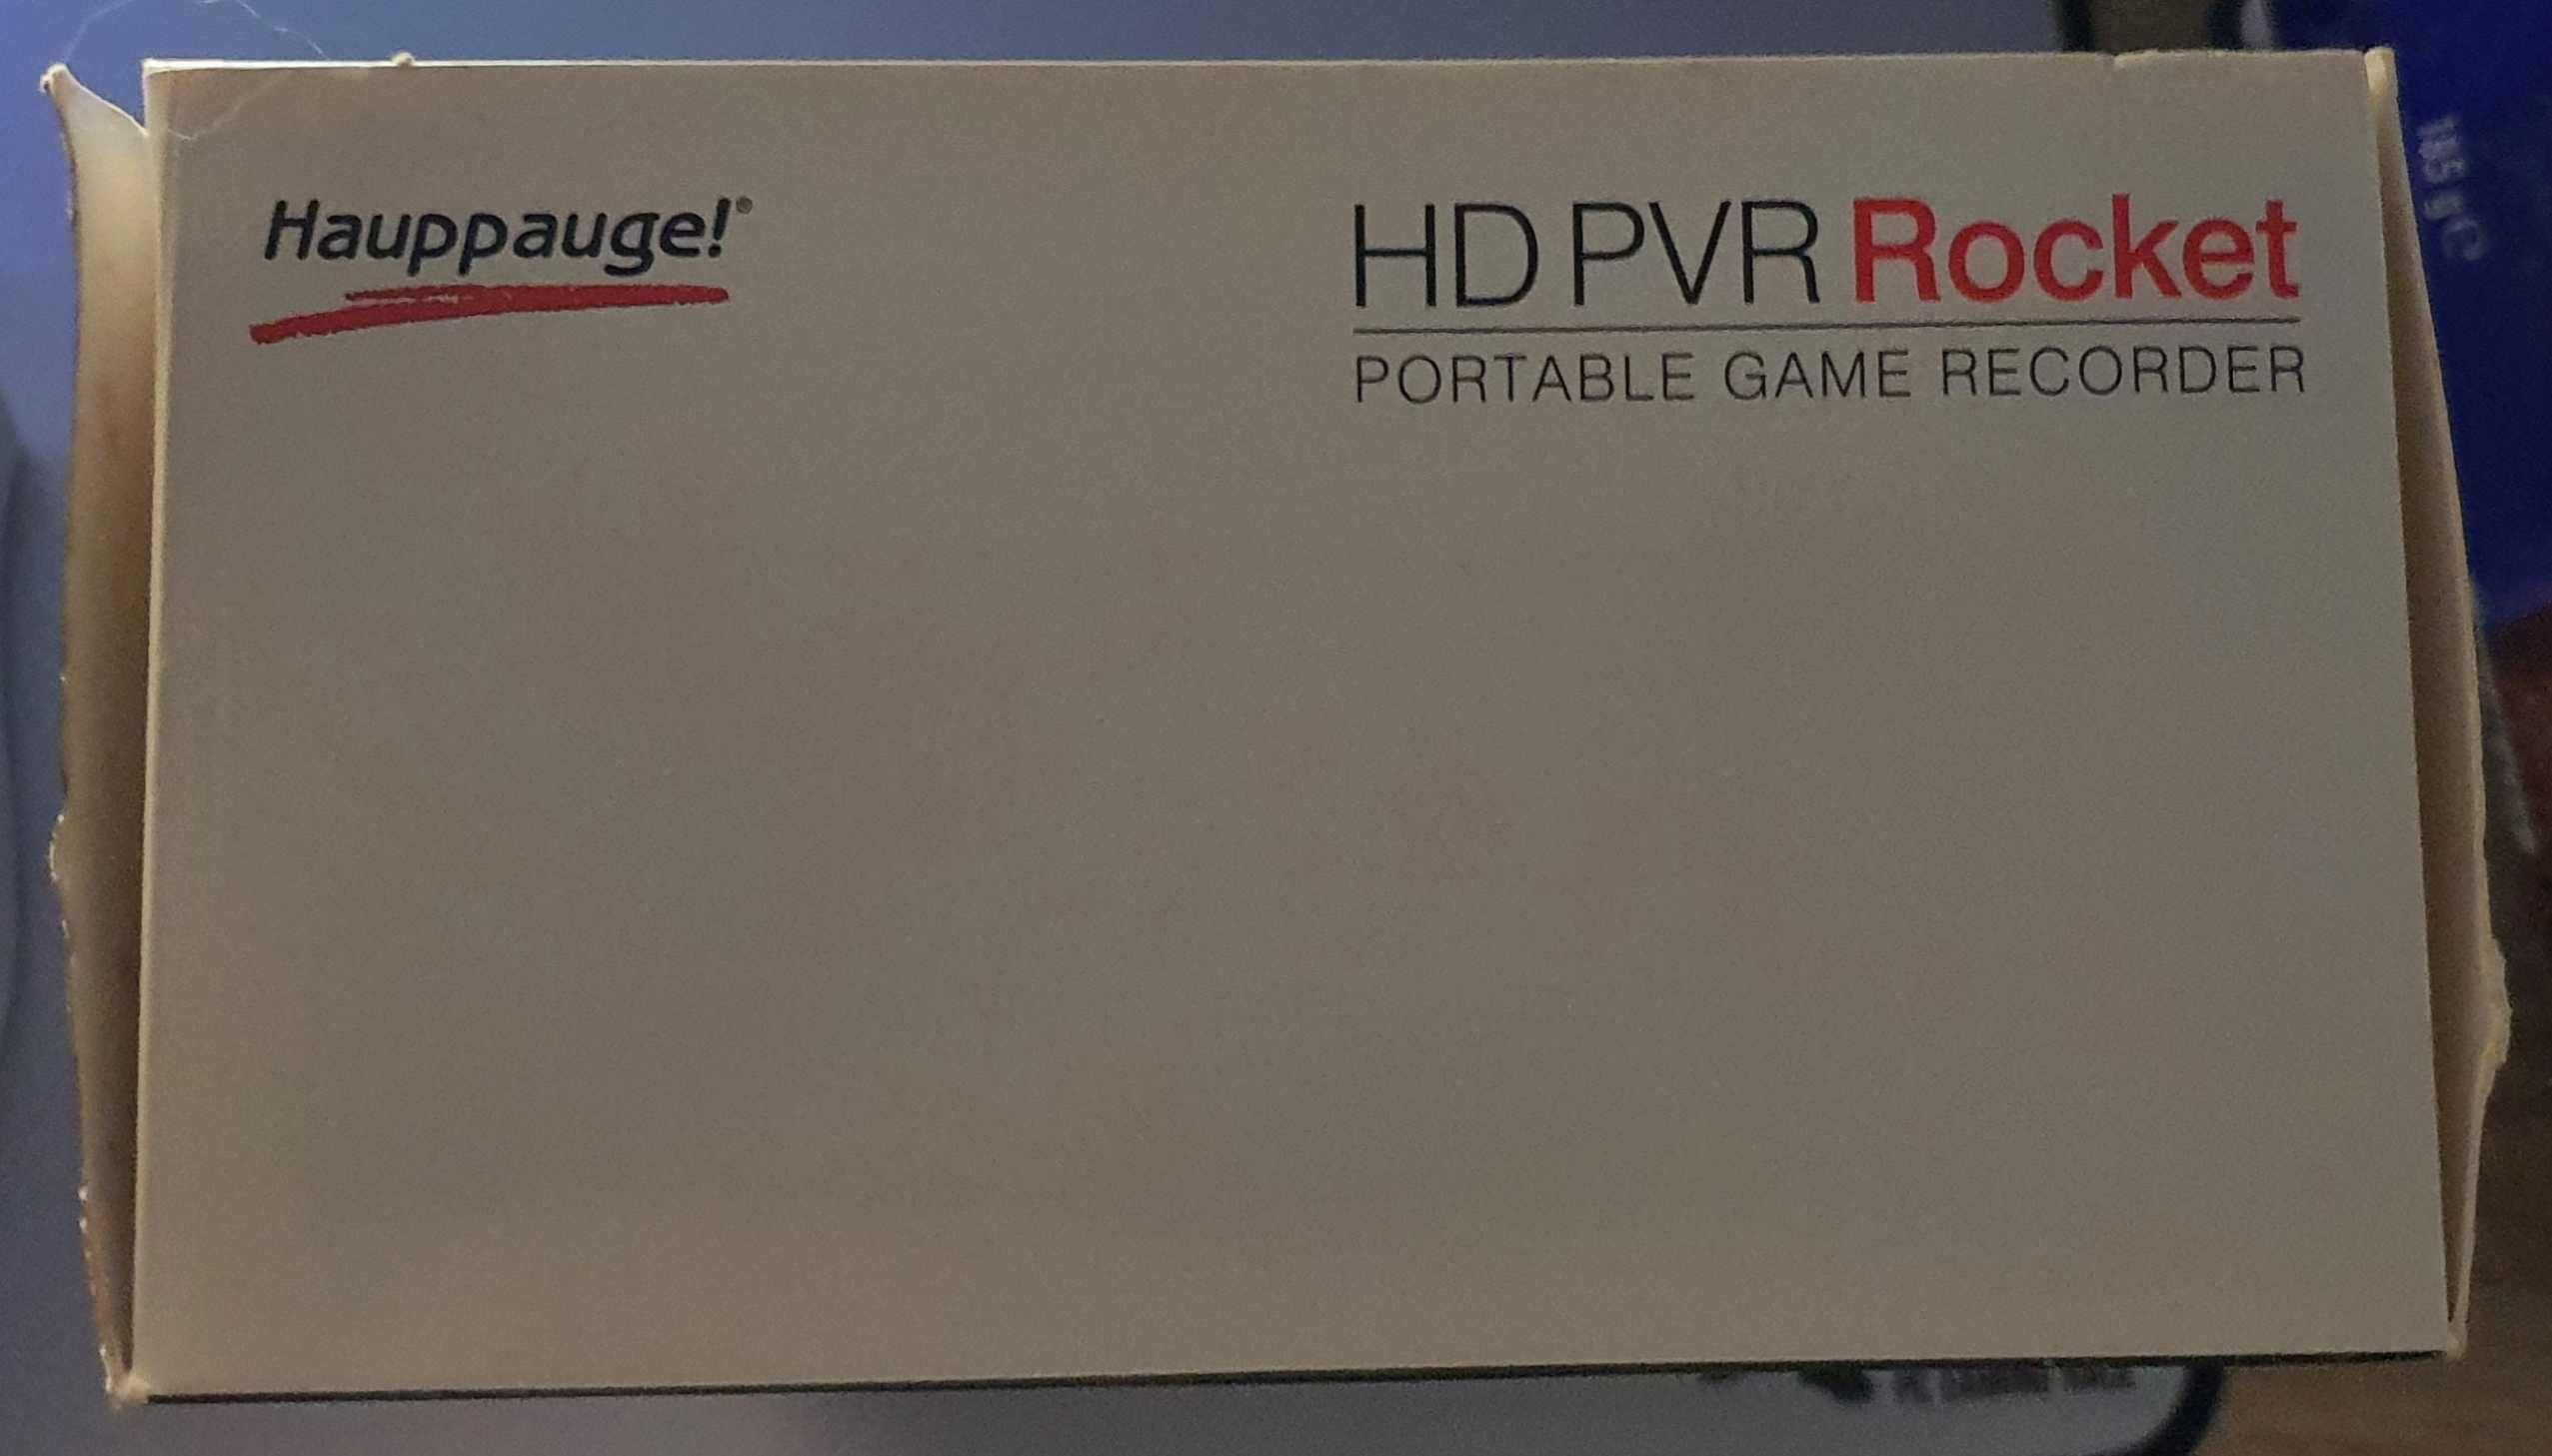 Hauppauge! HD PVR Rocket Portable Game Recorder model 1527